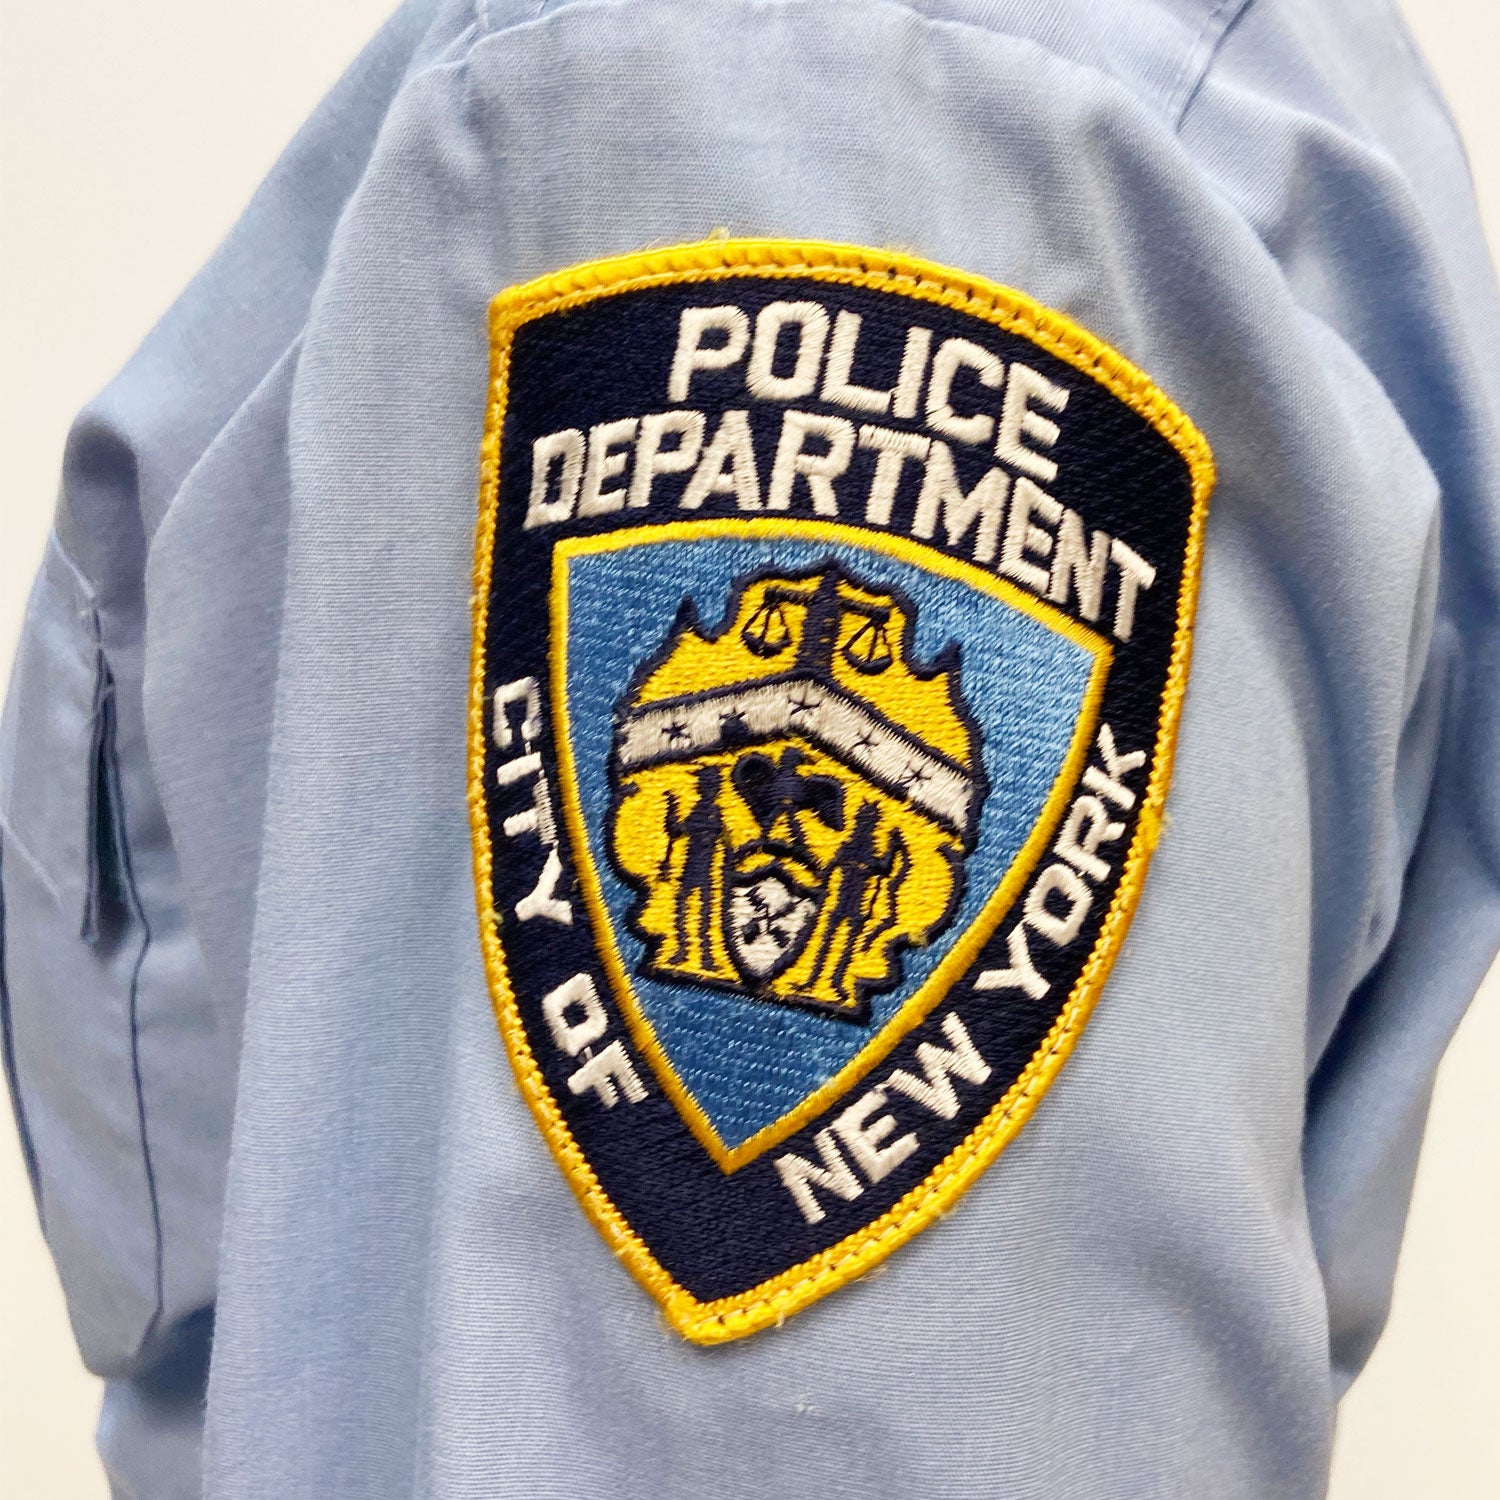 Production Quality Long Sleeve Police Uniform Costume